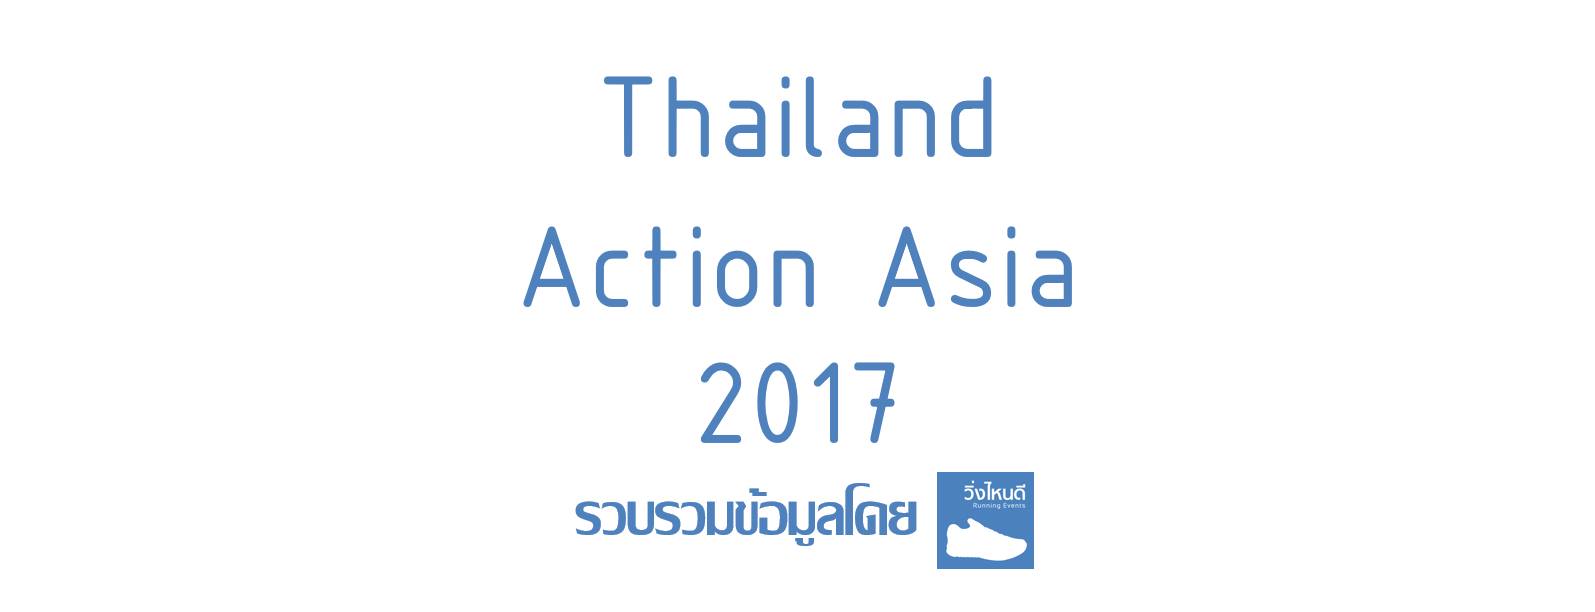 Thailand Action Asia 2017